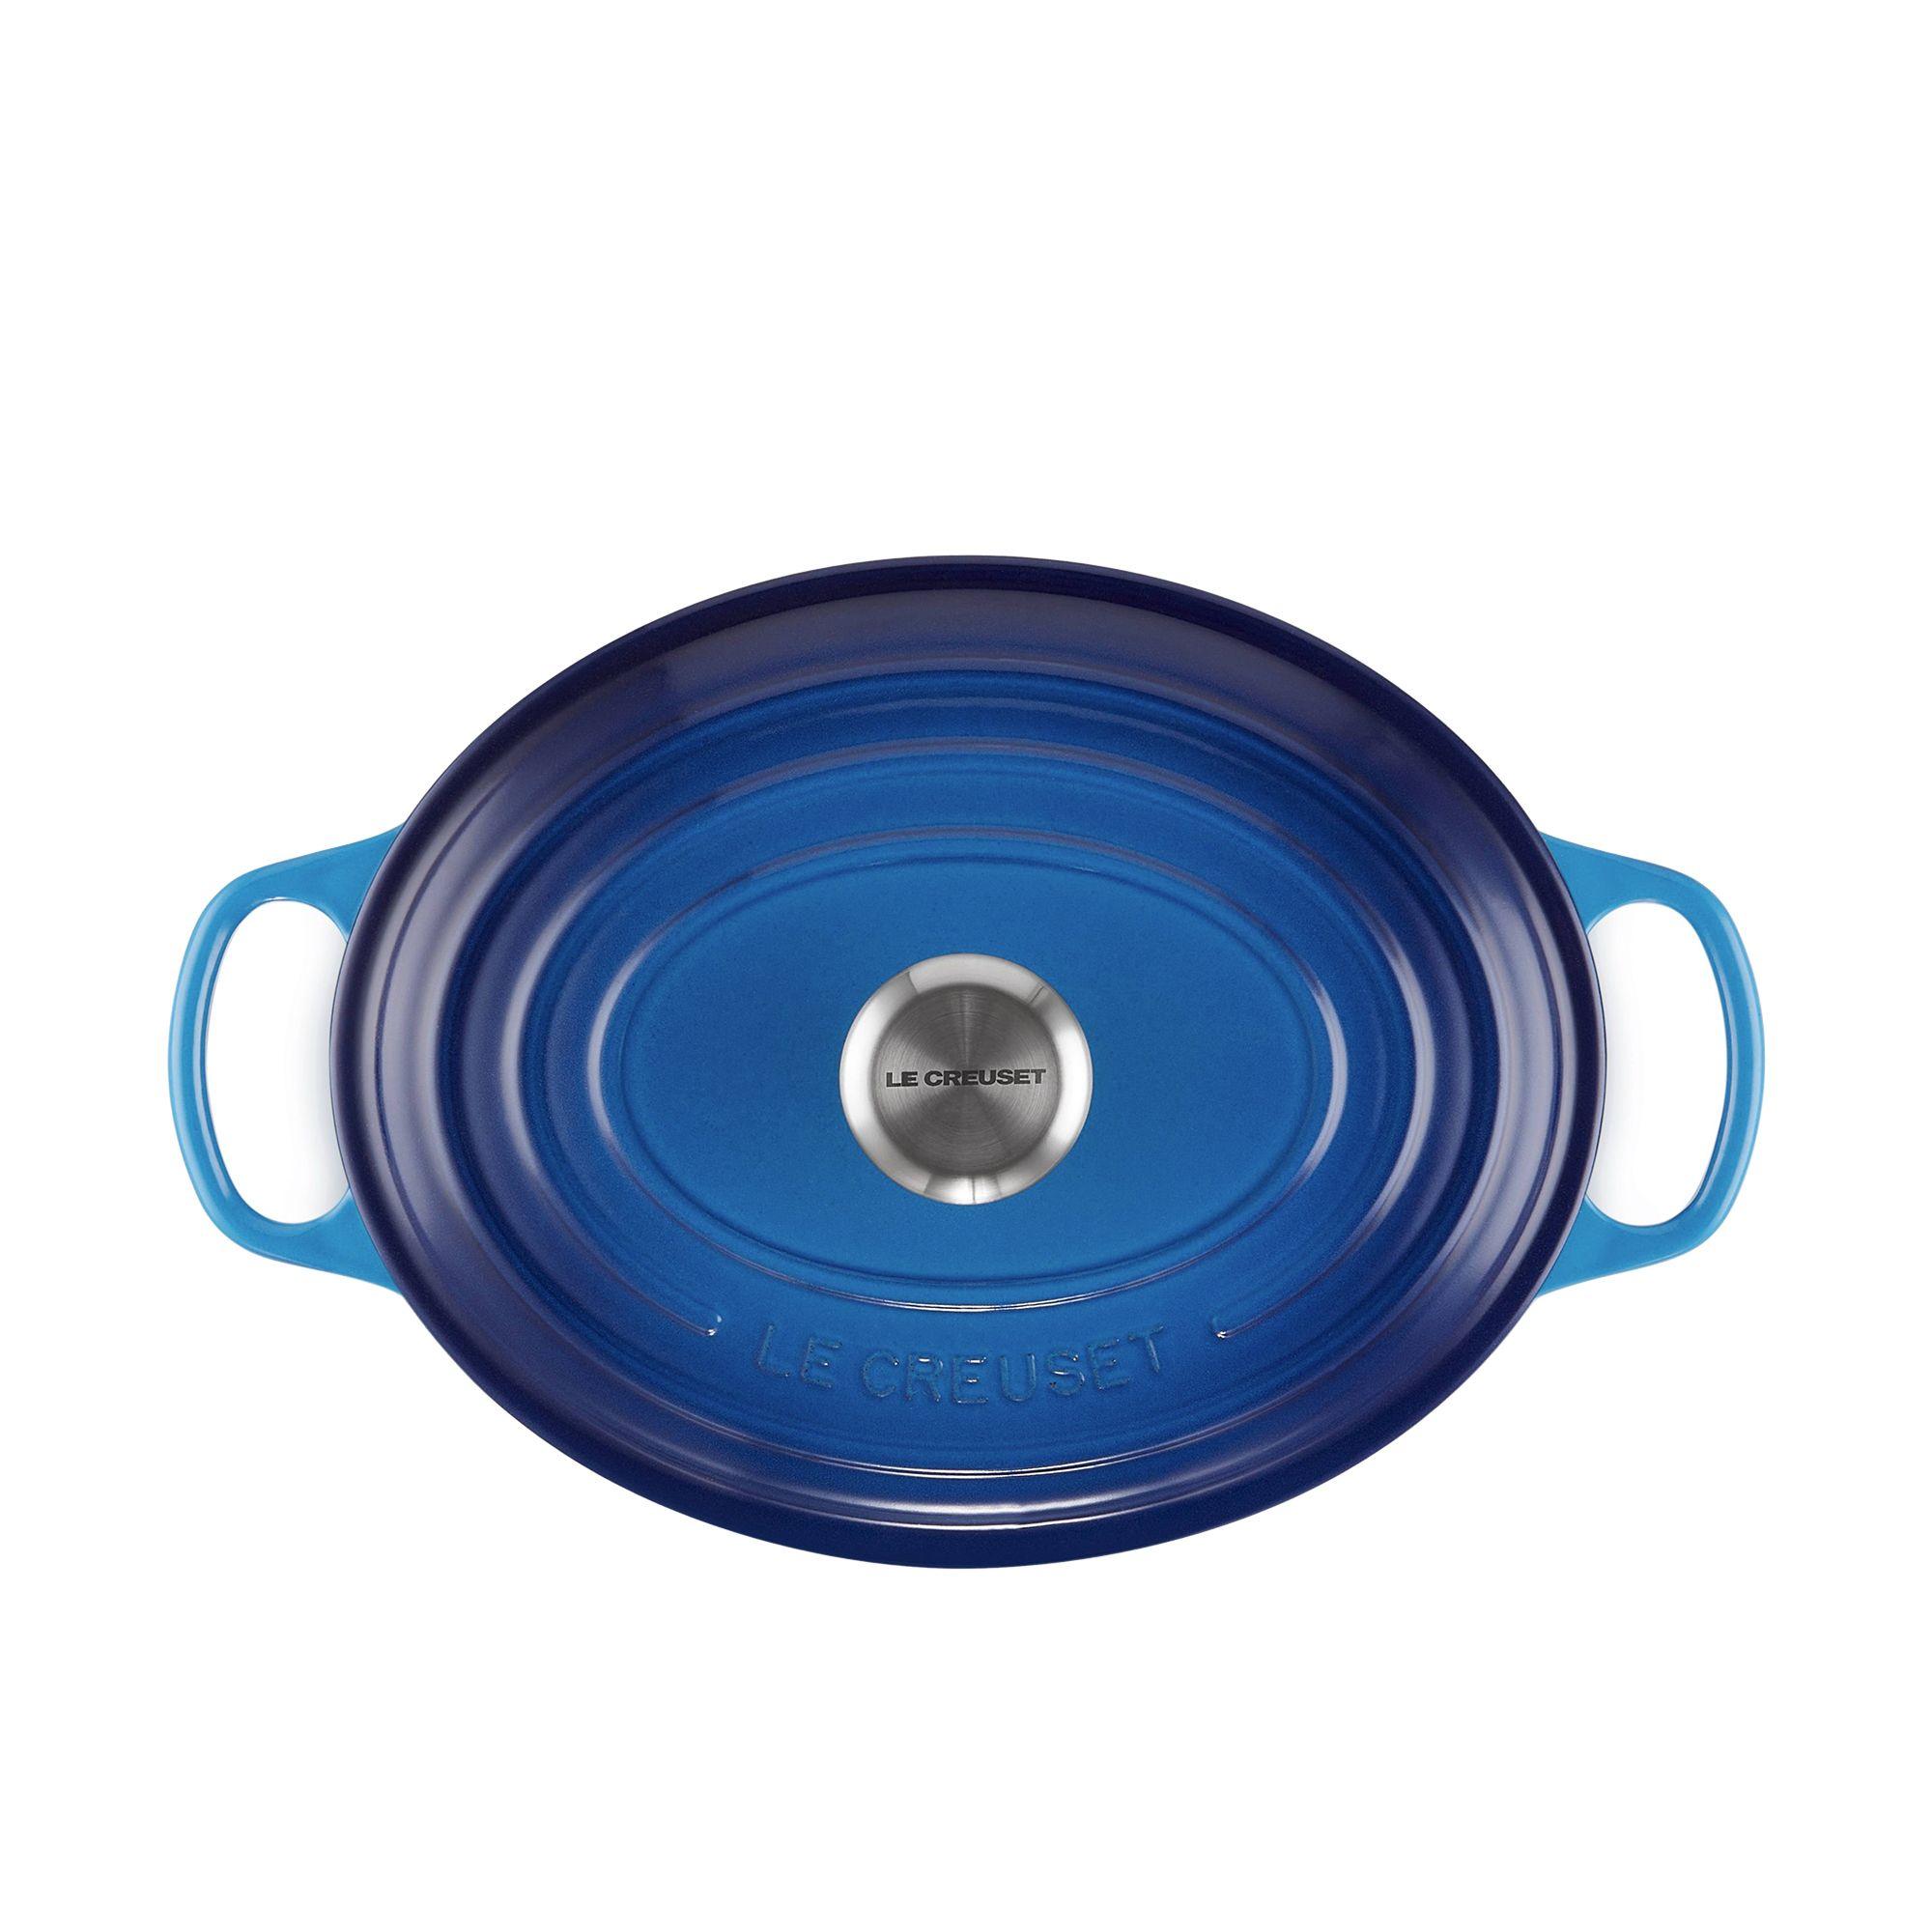 Le Creuset Signature Cast Iron Oval Casserole 29cm - 4.7L Azure Blue Image 6